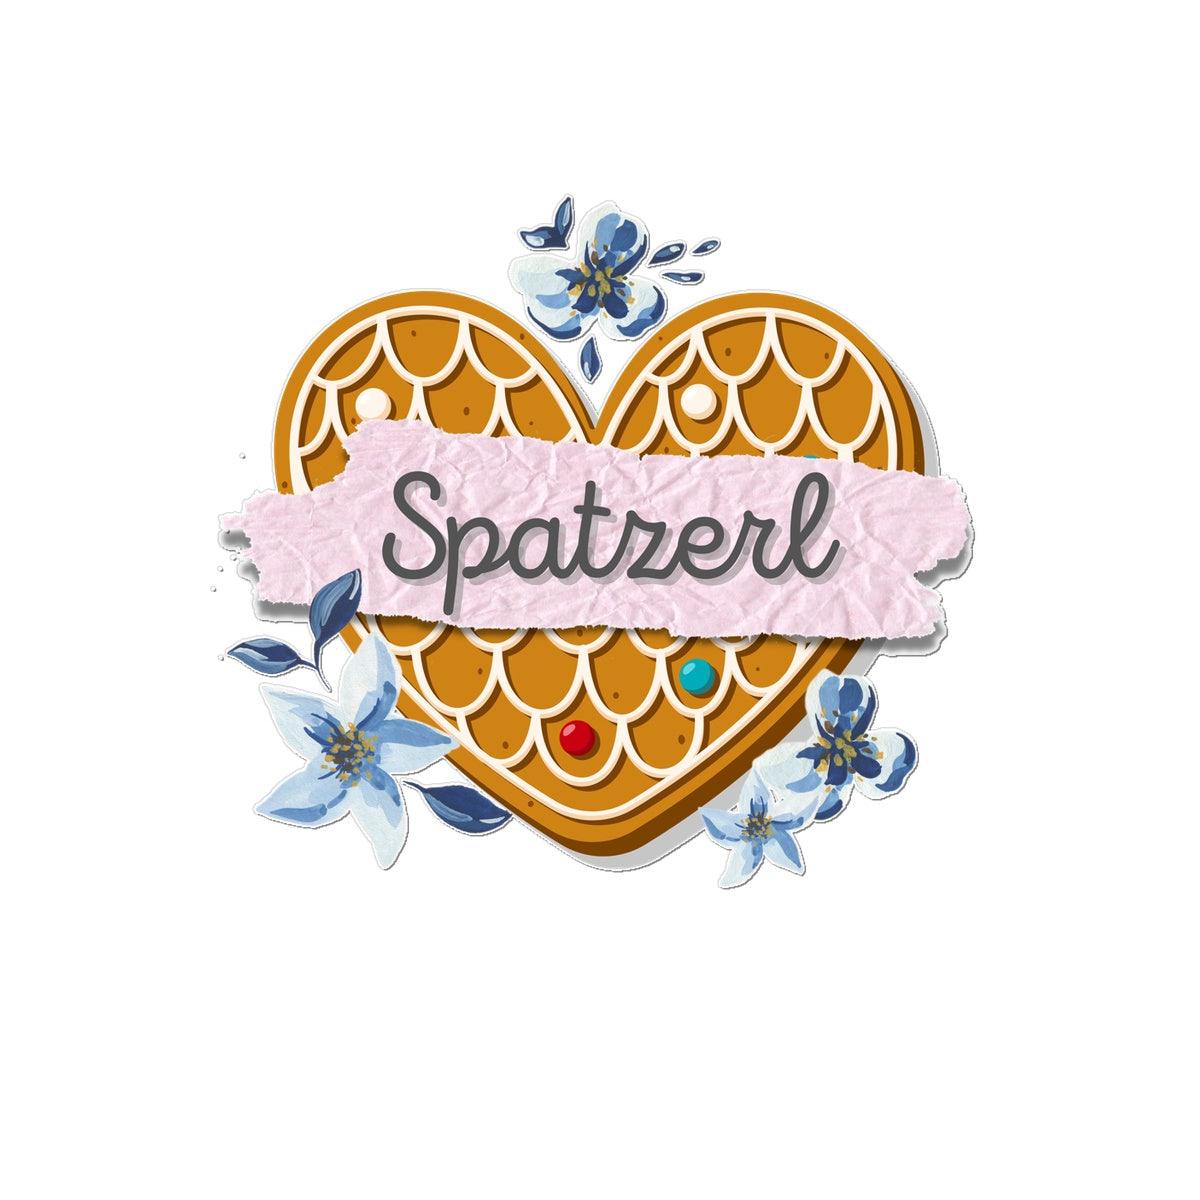 Temporary Tattoo, Bavarian Retro Gingerbread heart "Spatzerl" with florals, pink - 2 sizes - Bavari Shop - Bavarian Outfits, Dirndl, Lederhosen & Accessories